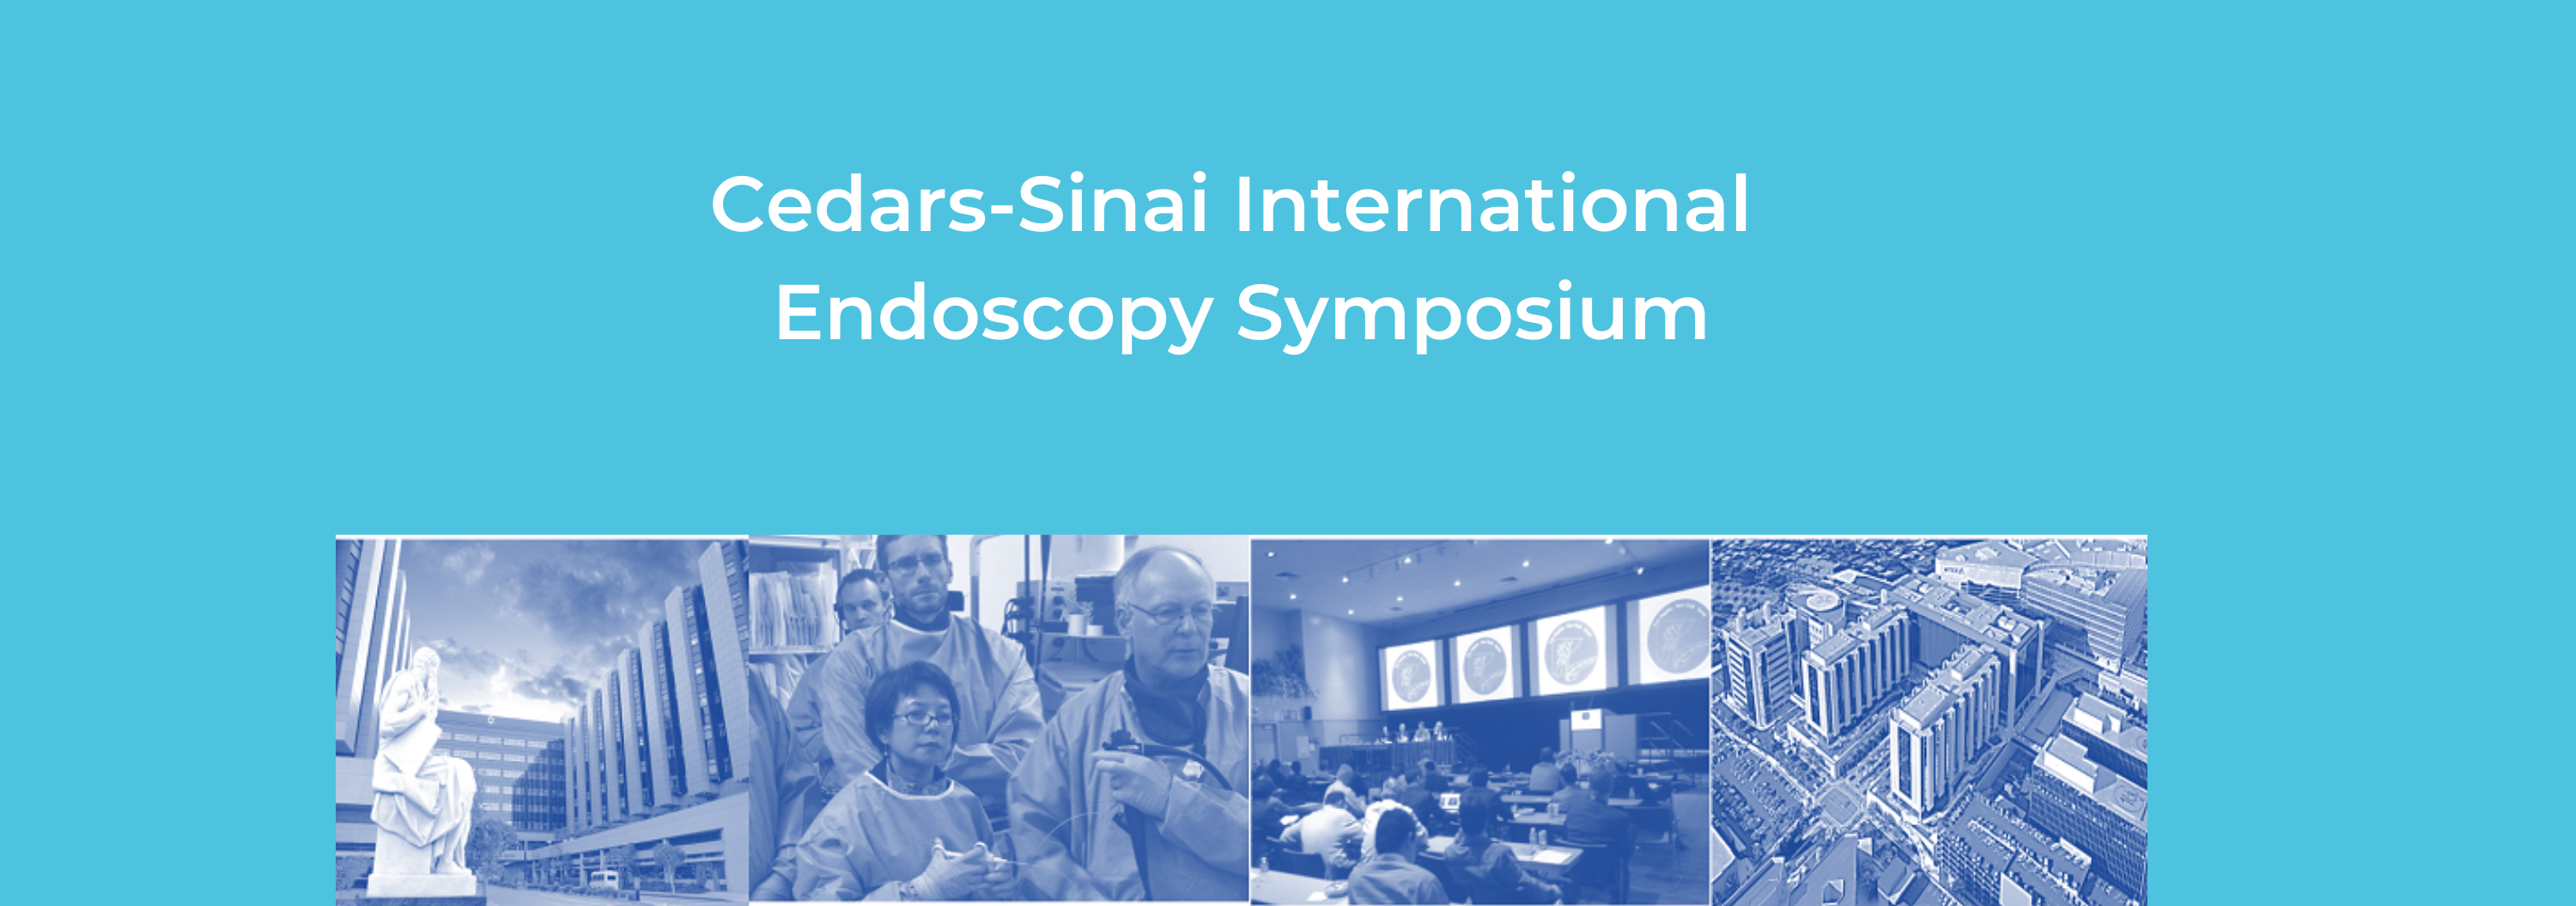 2020 Cedars-Sinai International Endoscopy Symposium Banner